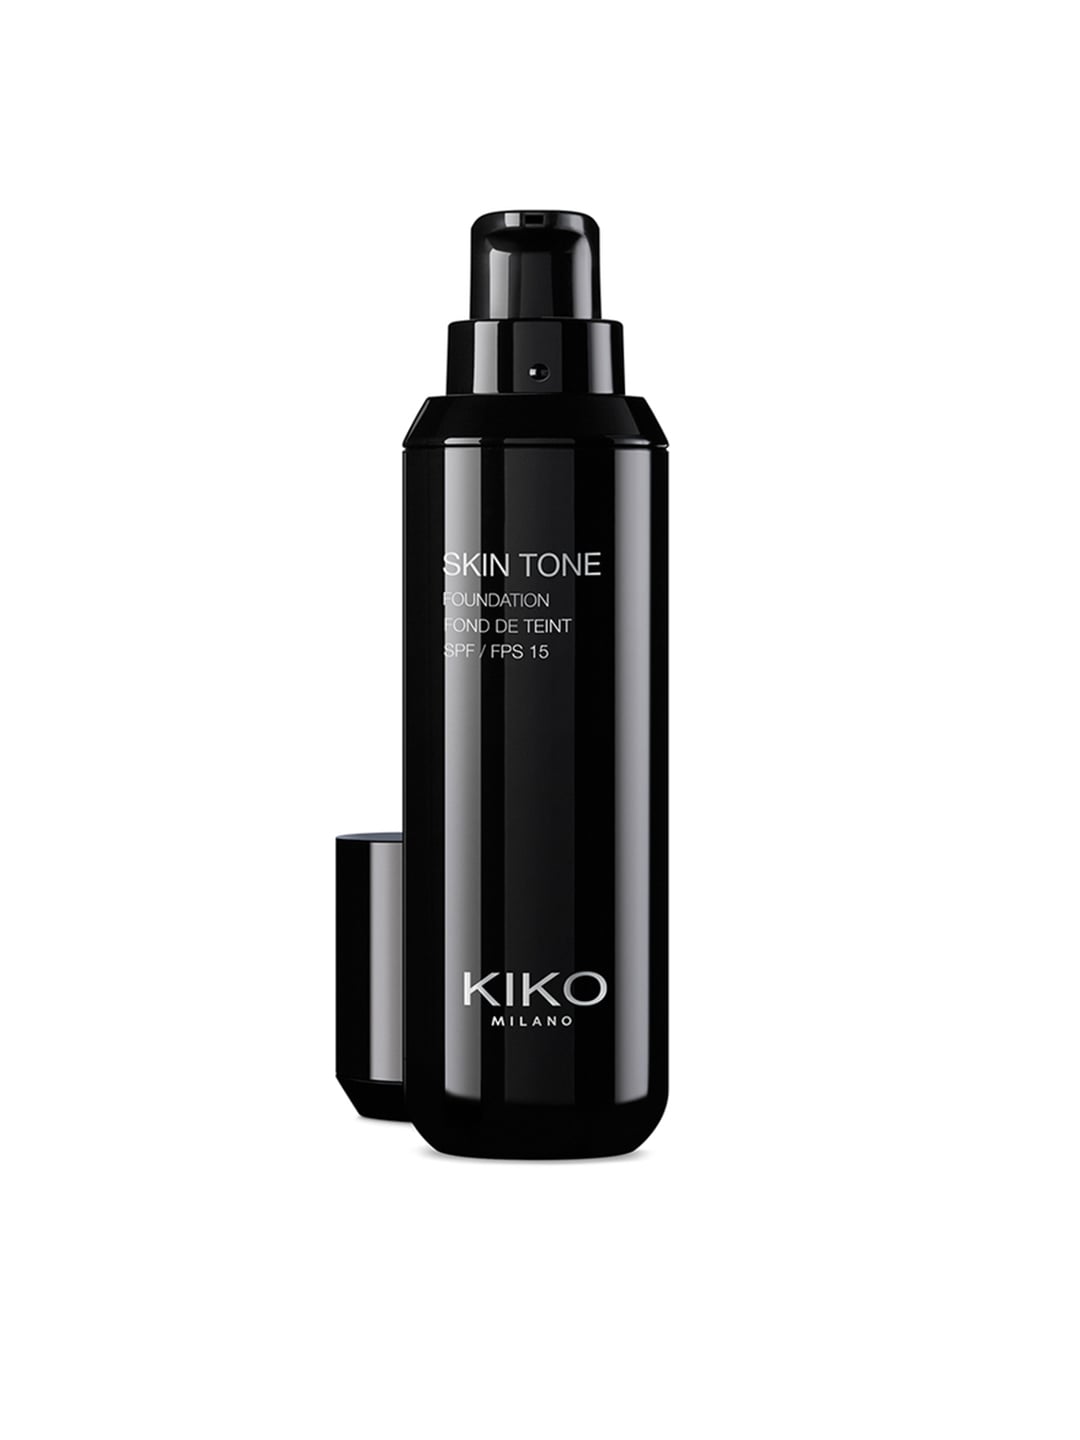 KIKO MILANO Skin Tone Foundation with SPF 15 - Neutral 10 Price in India